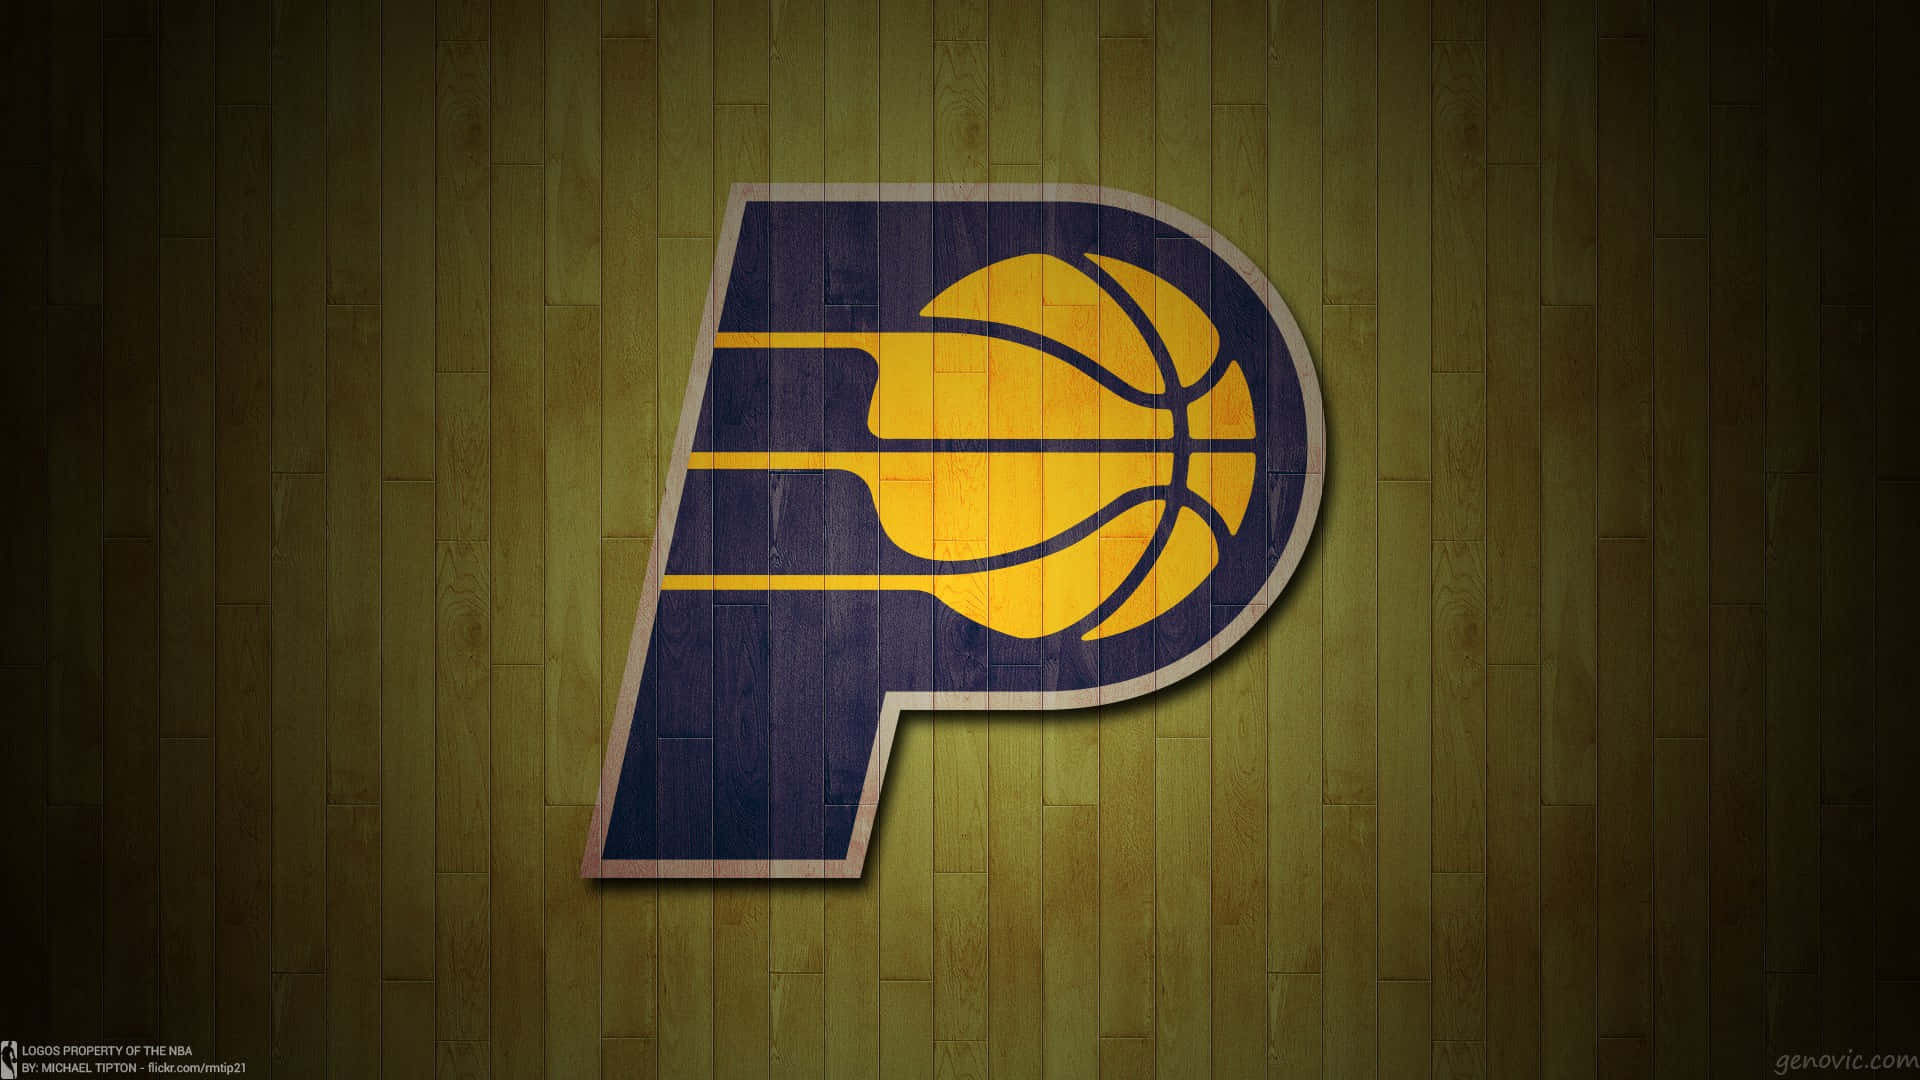 NBA Team Logos and Symbols Wallpaper